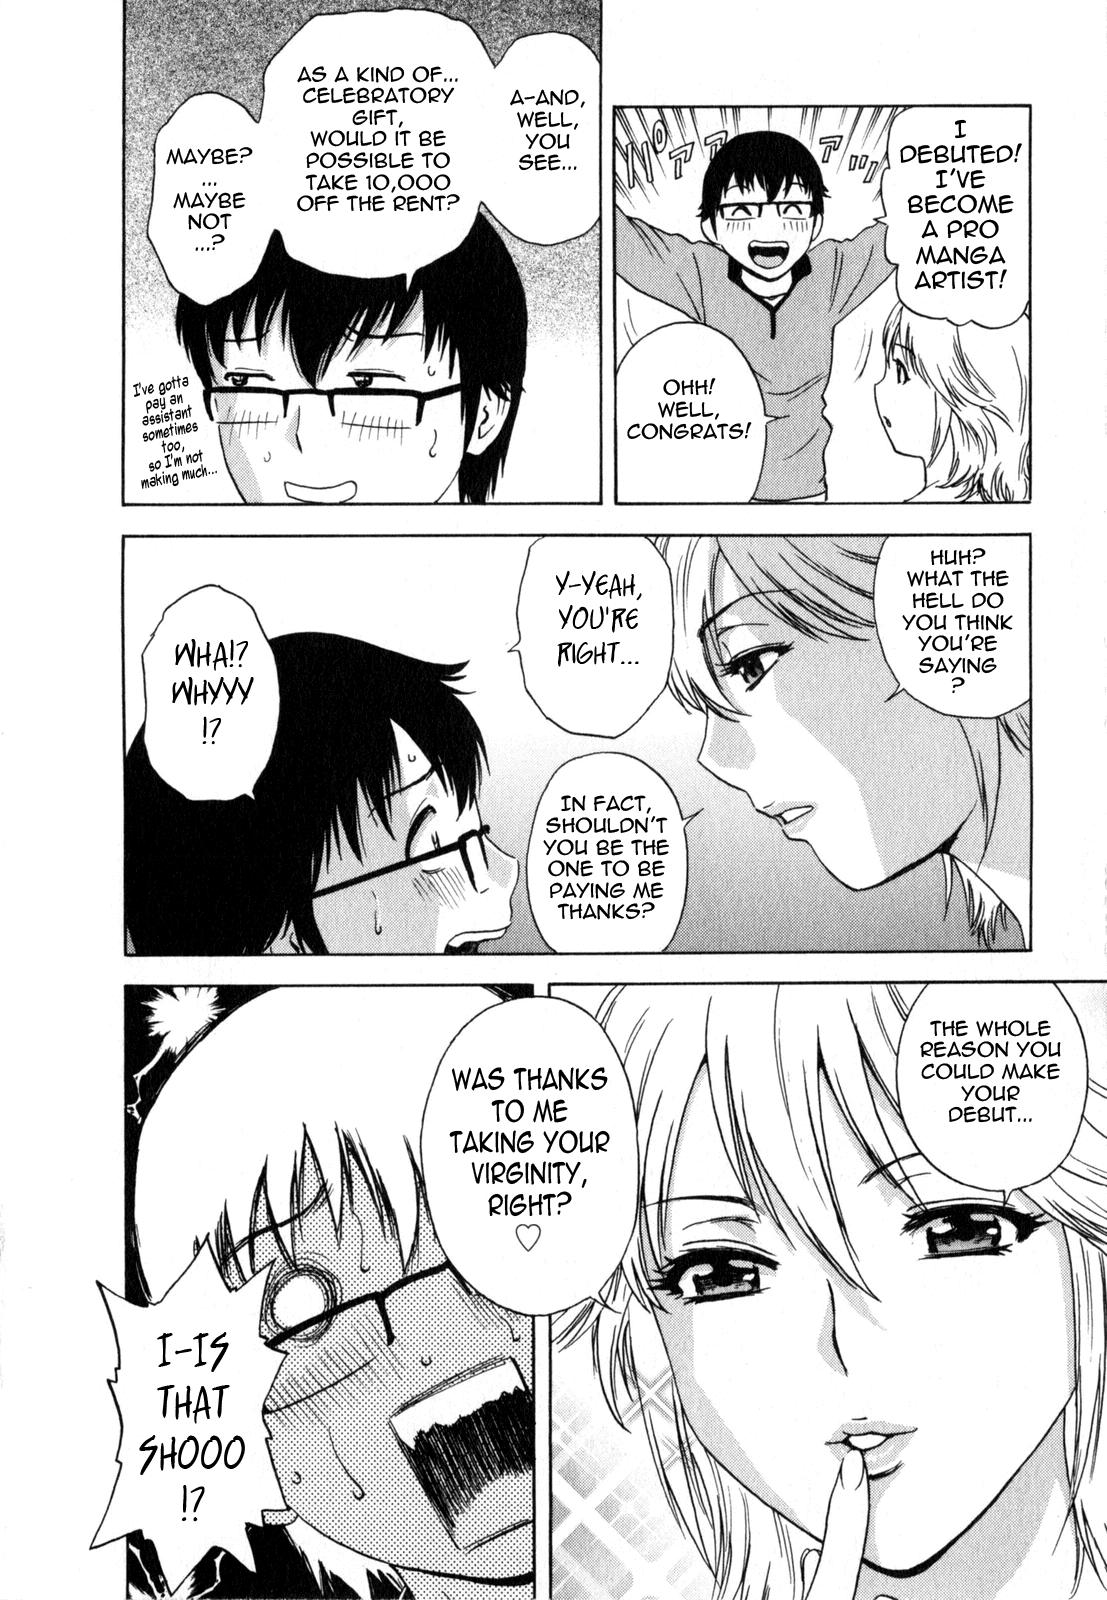 [Hidemaru] Life with Married Women Just Like a Manga 2 - Ch. 1-7 [English] {Tadanohito} 60